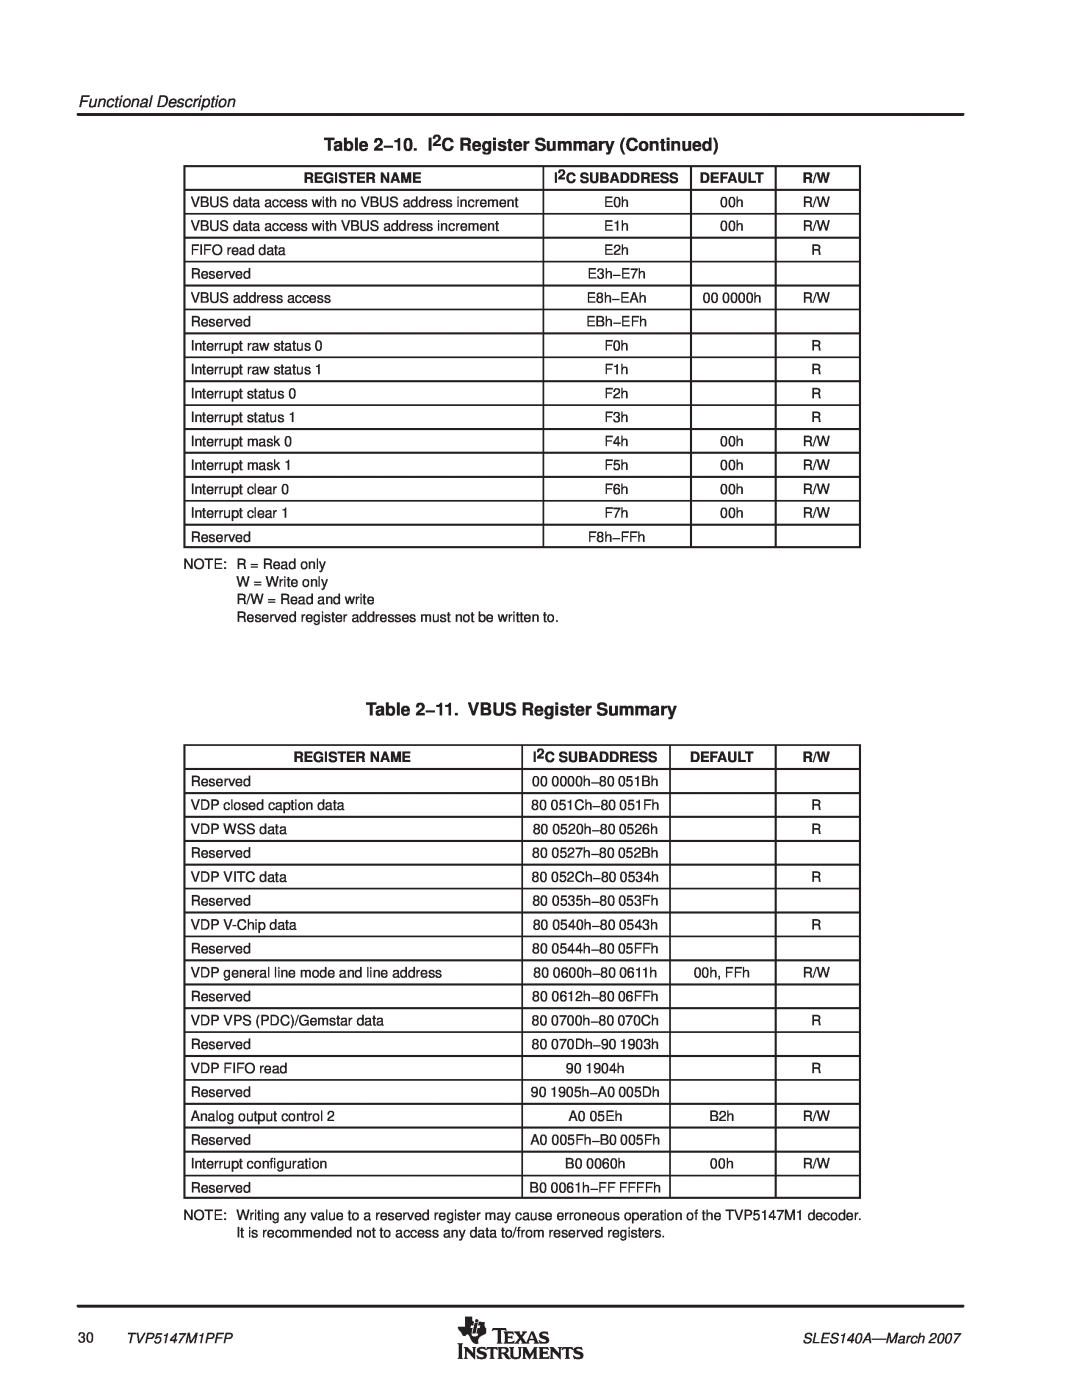 Texas Instruments TVP5147M1PFP manual 11. VBUS Register Summary, 10. I 2C Register Summary Continued, E3h−E7h 